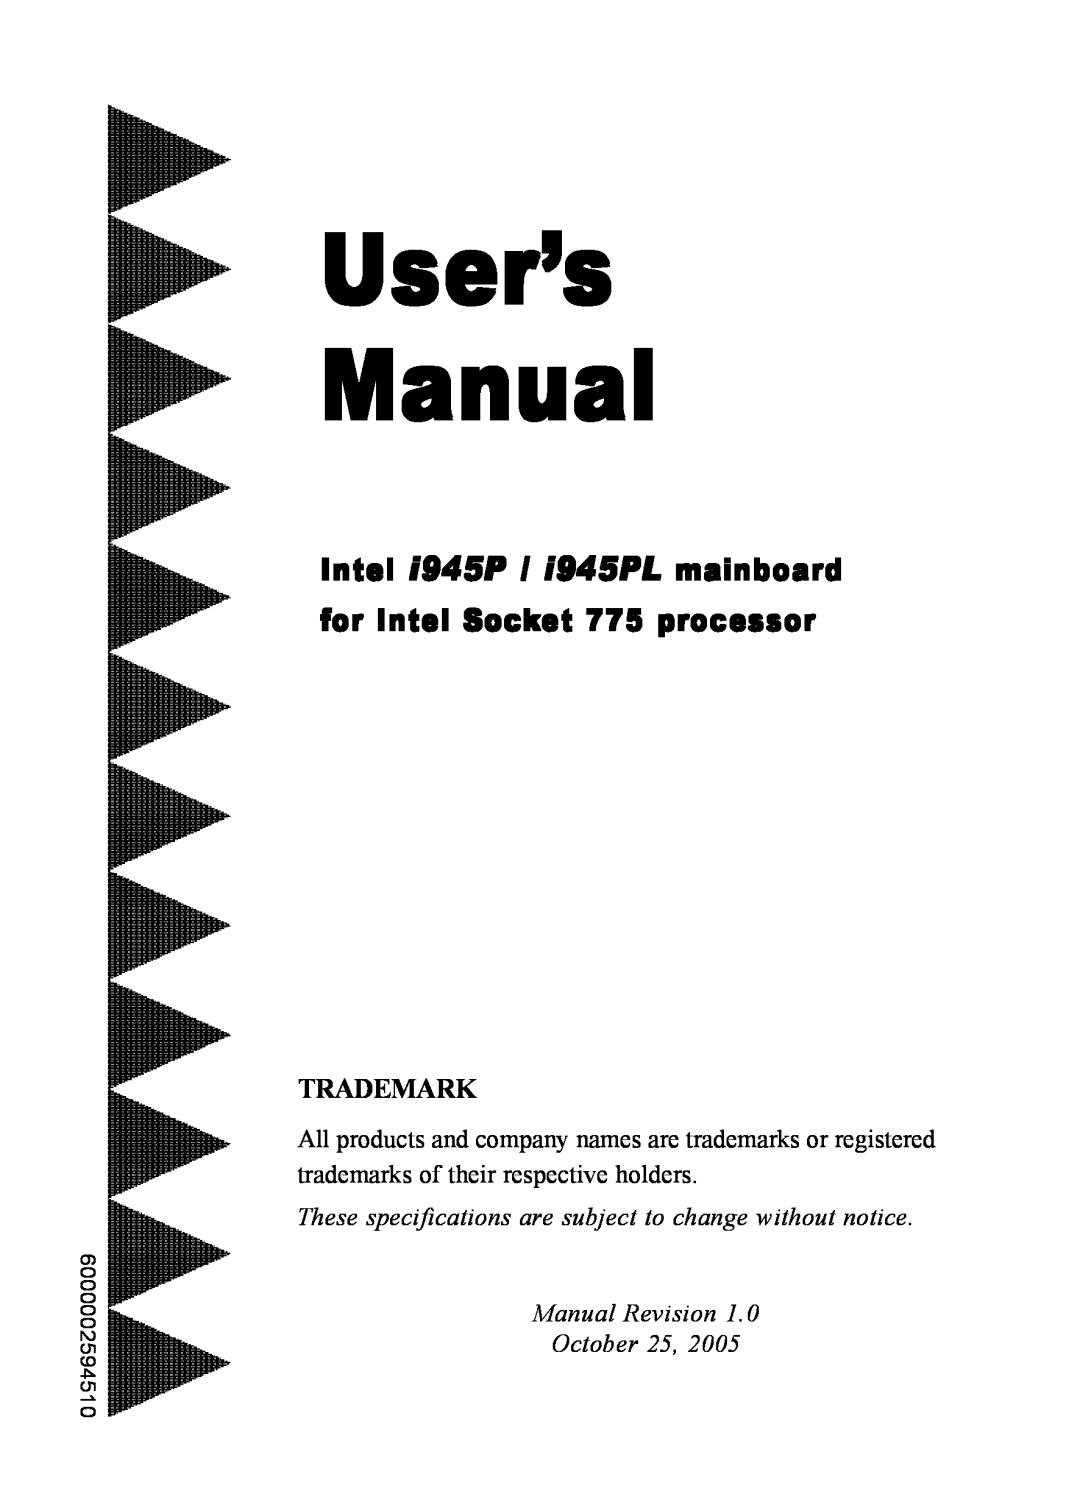 Intel I945P specifications Manual Revision October 25, User’s, Trademark, 6000002594510 